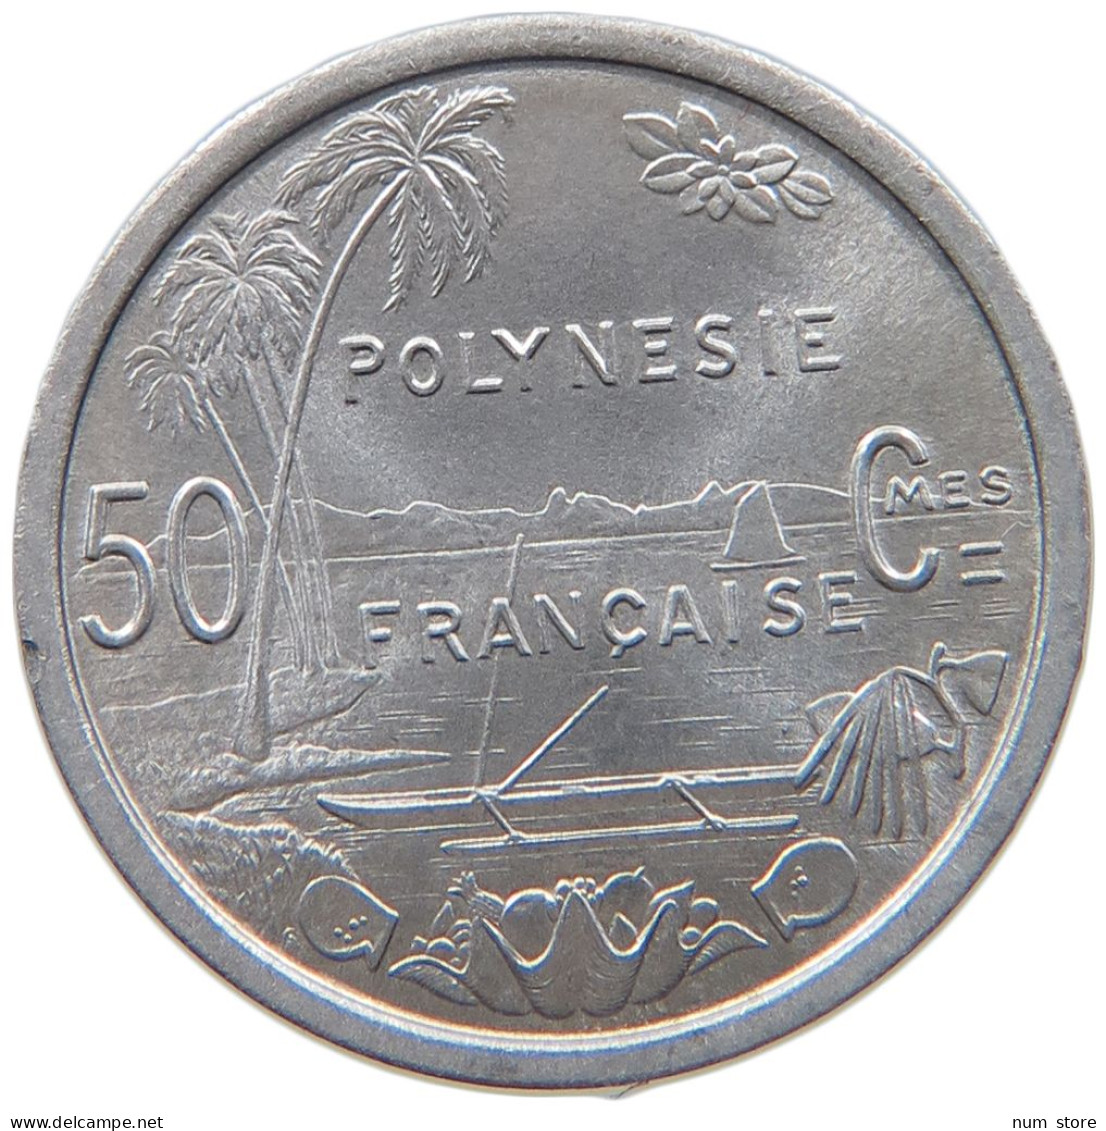 FRENCH POLYNESIA 50 CENTIMES 1965 #s089 0329 - Polinesia Francese